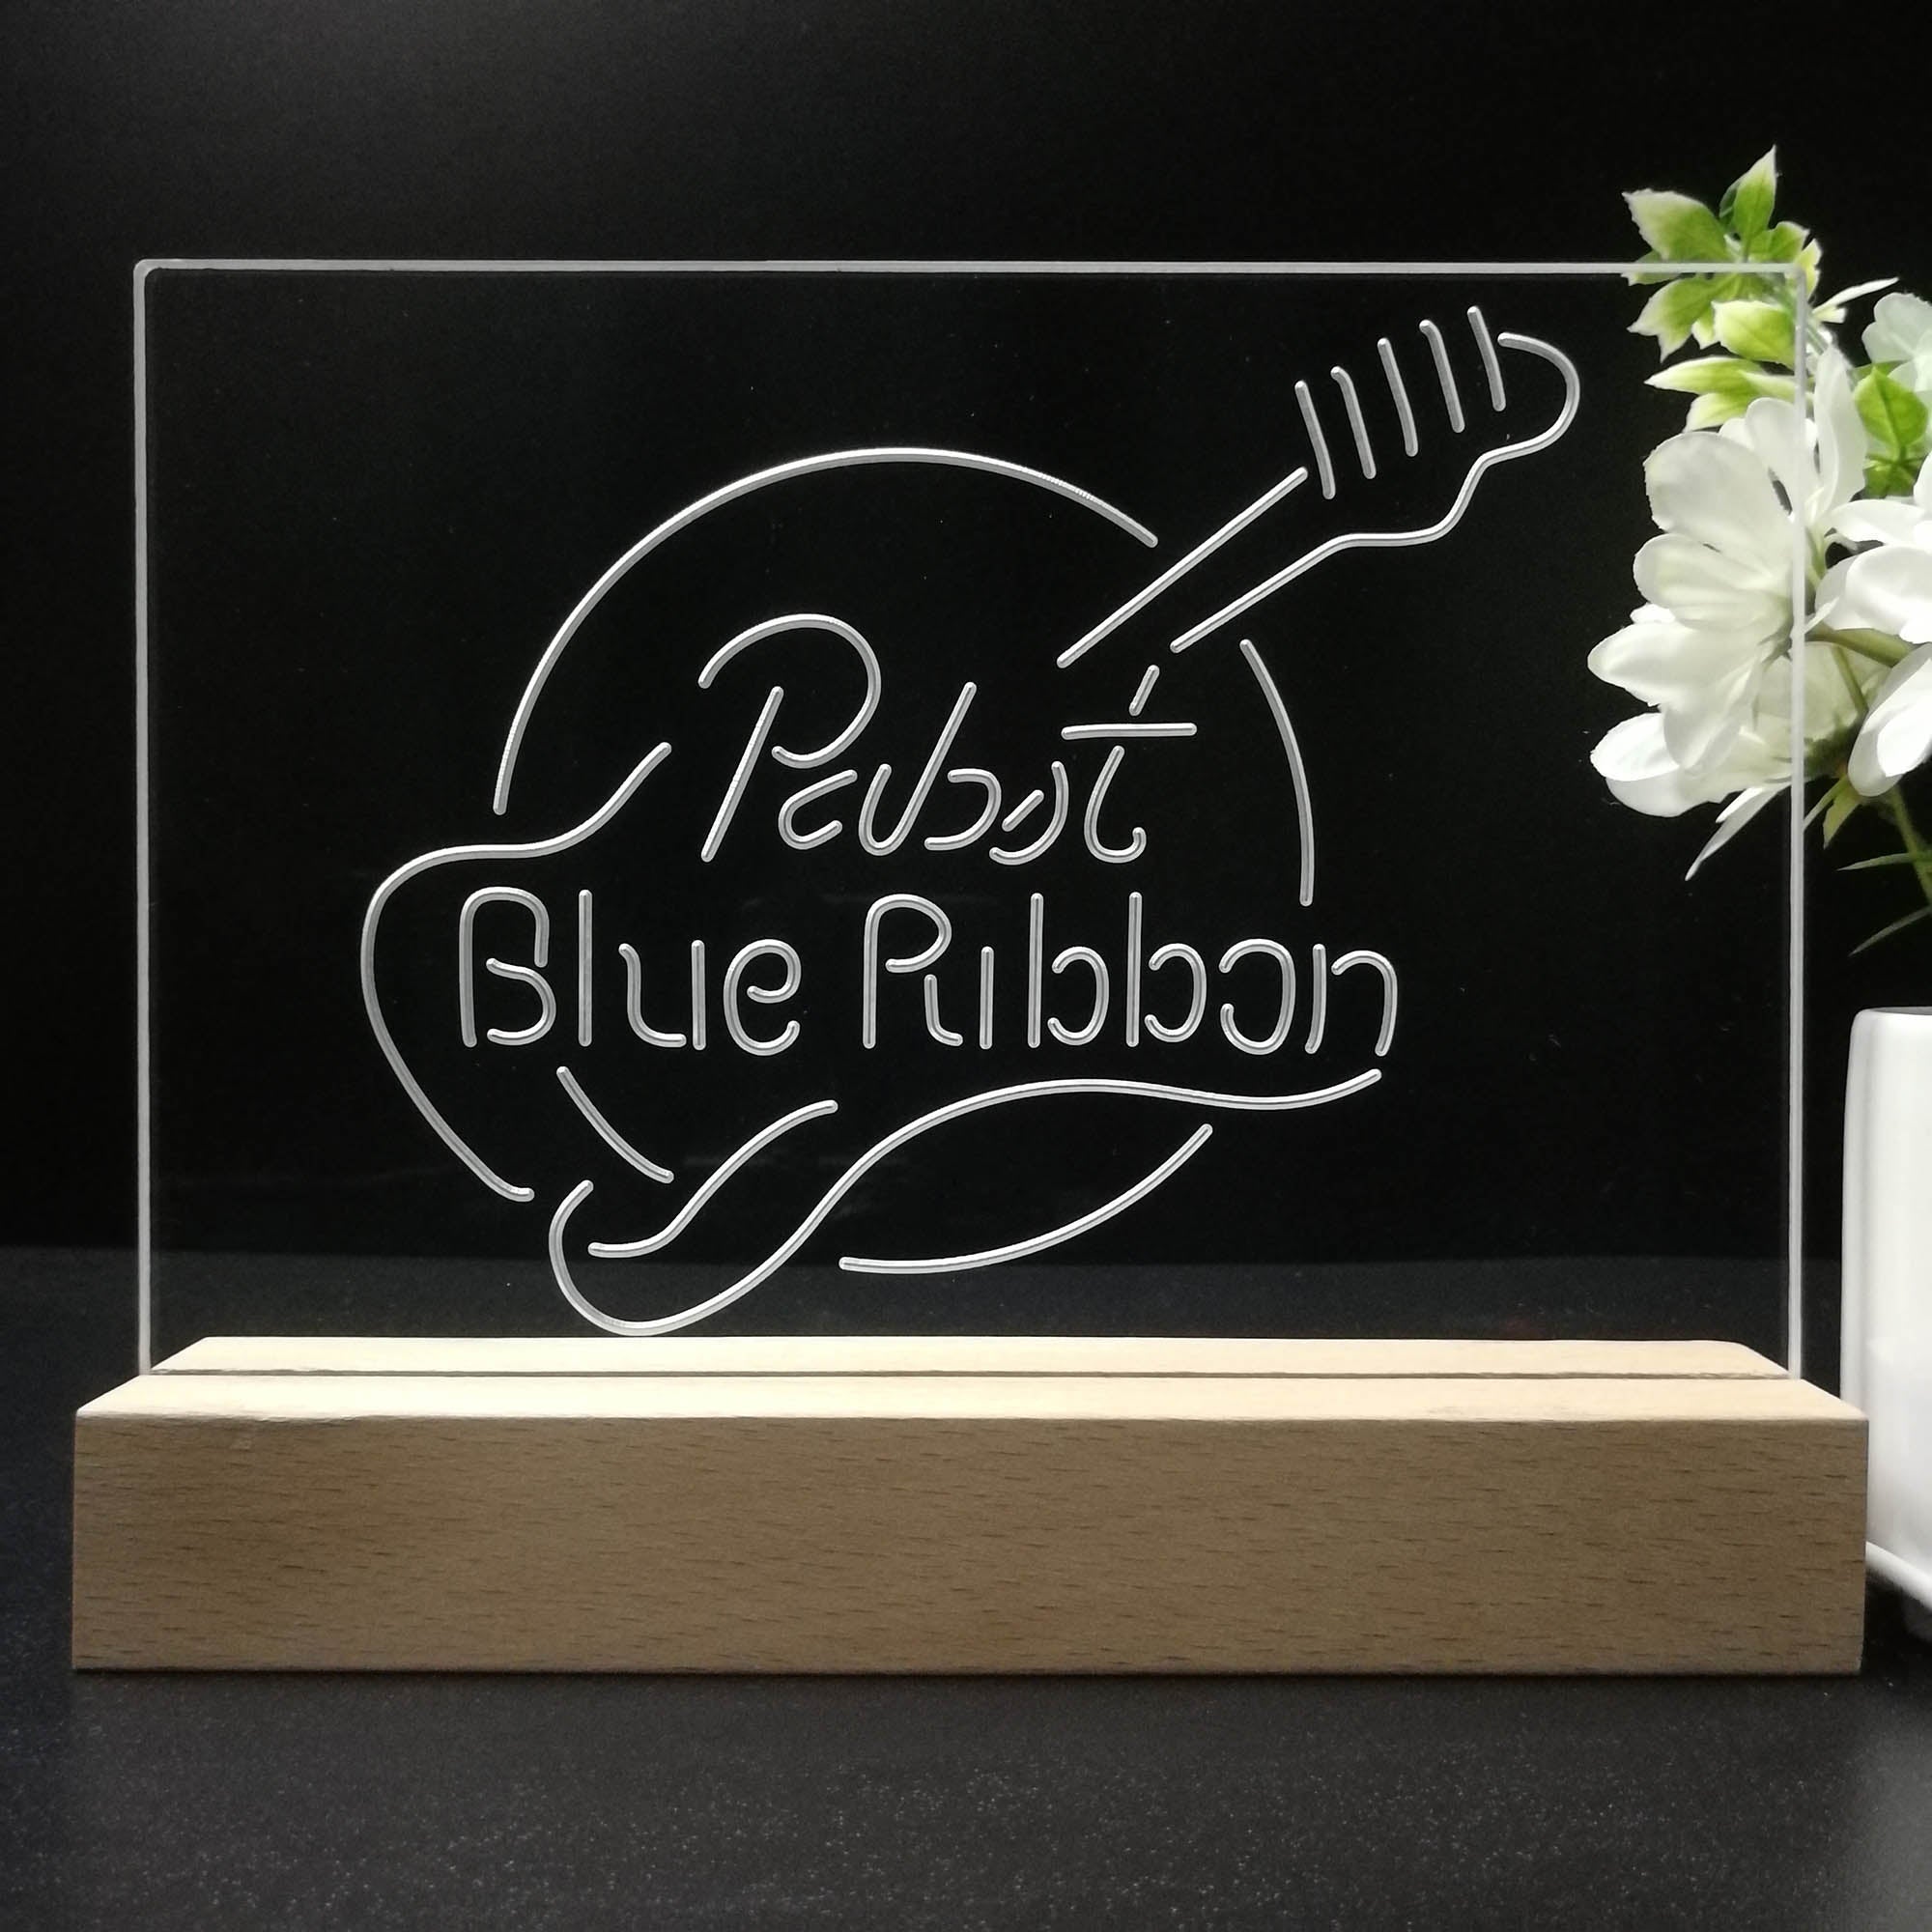 Pabst Blue Ribbon Guitar Neon Sign Pub Bar Decor Lamp